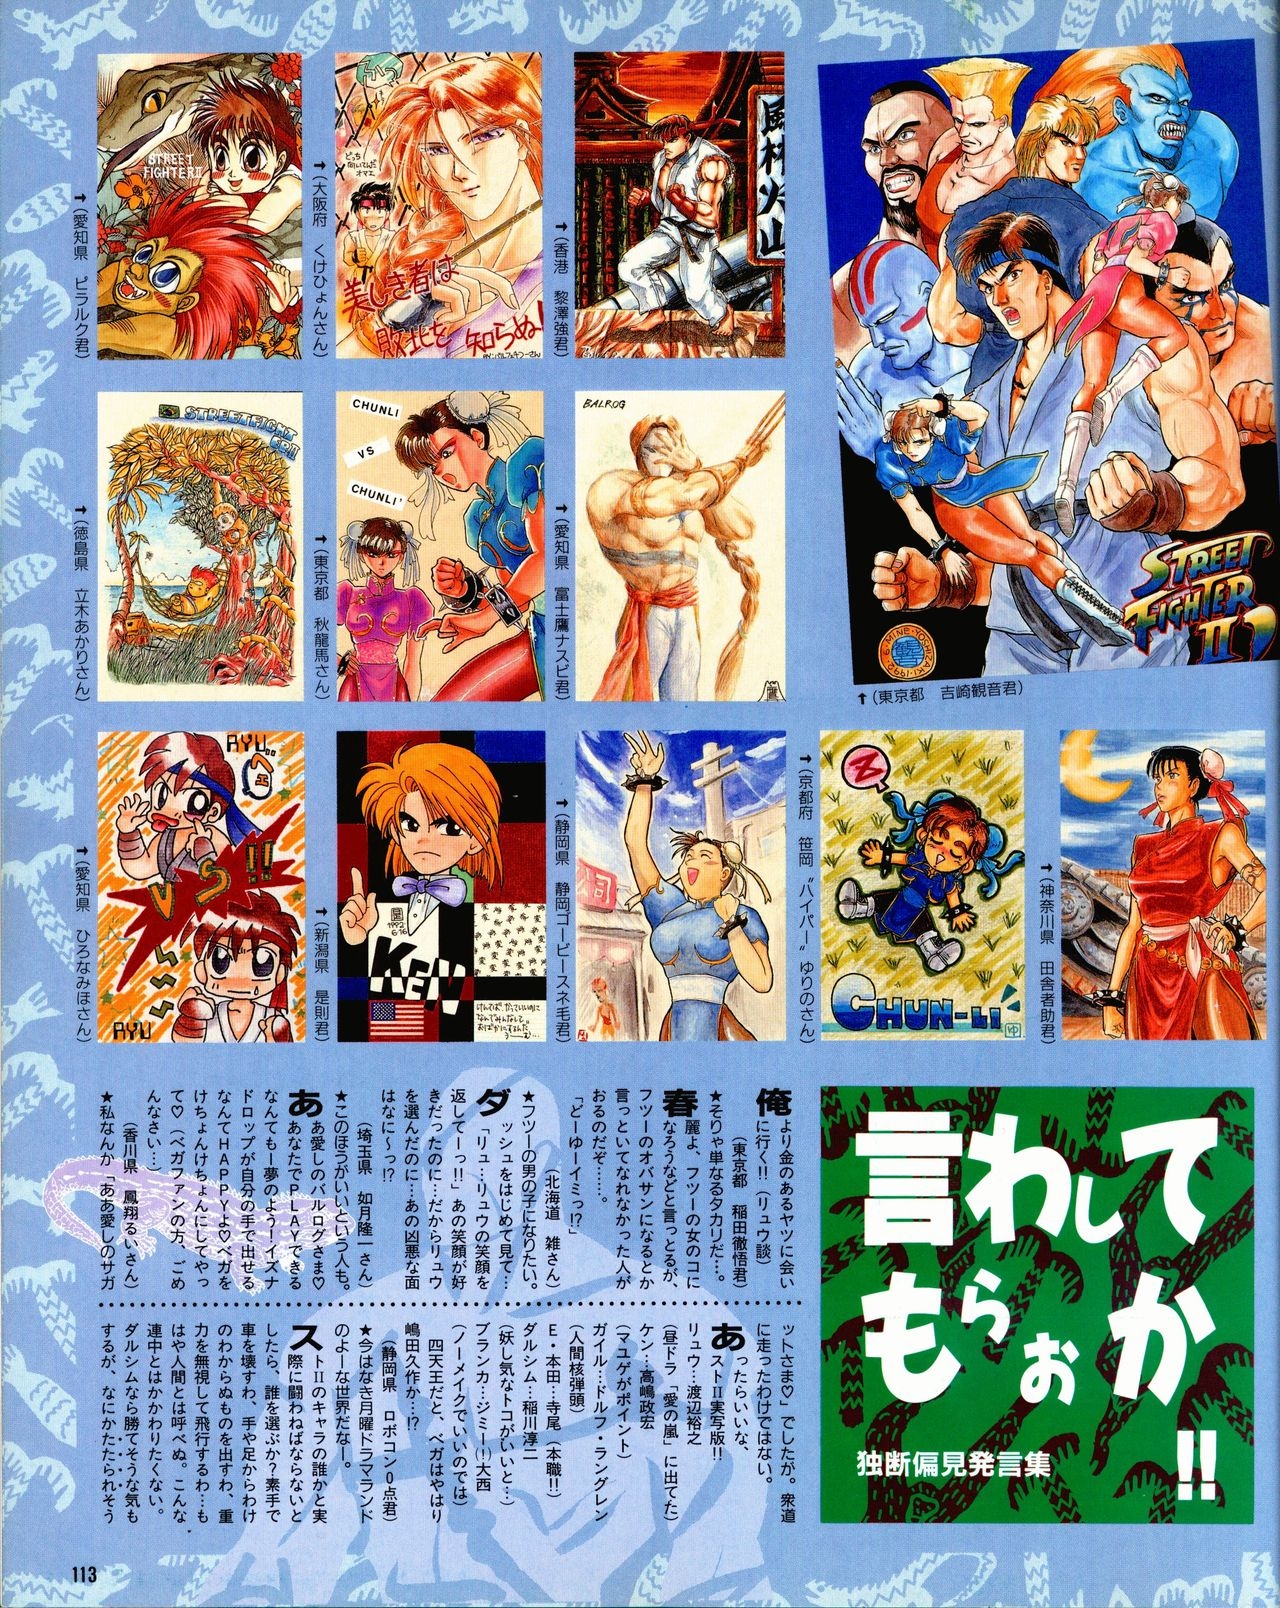 Street Fighter II Dash - Gamest special issue 77 114